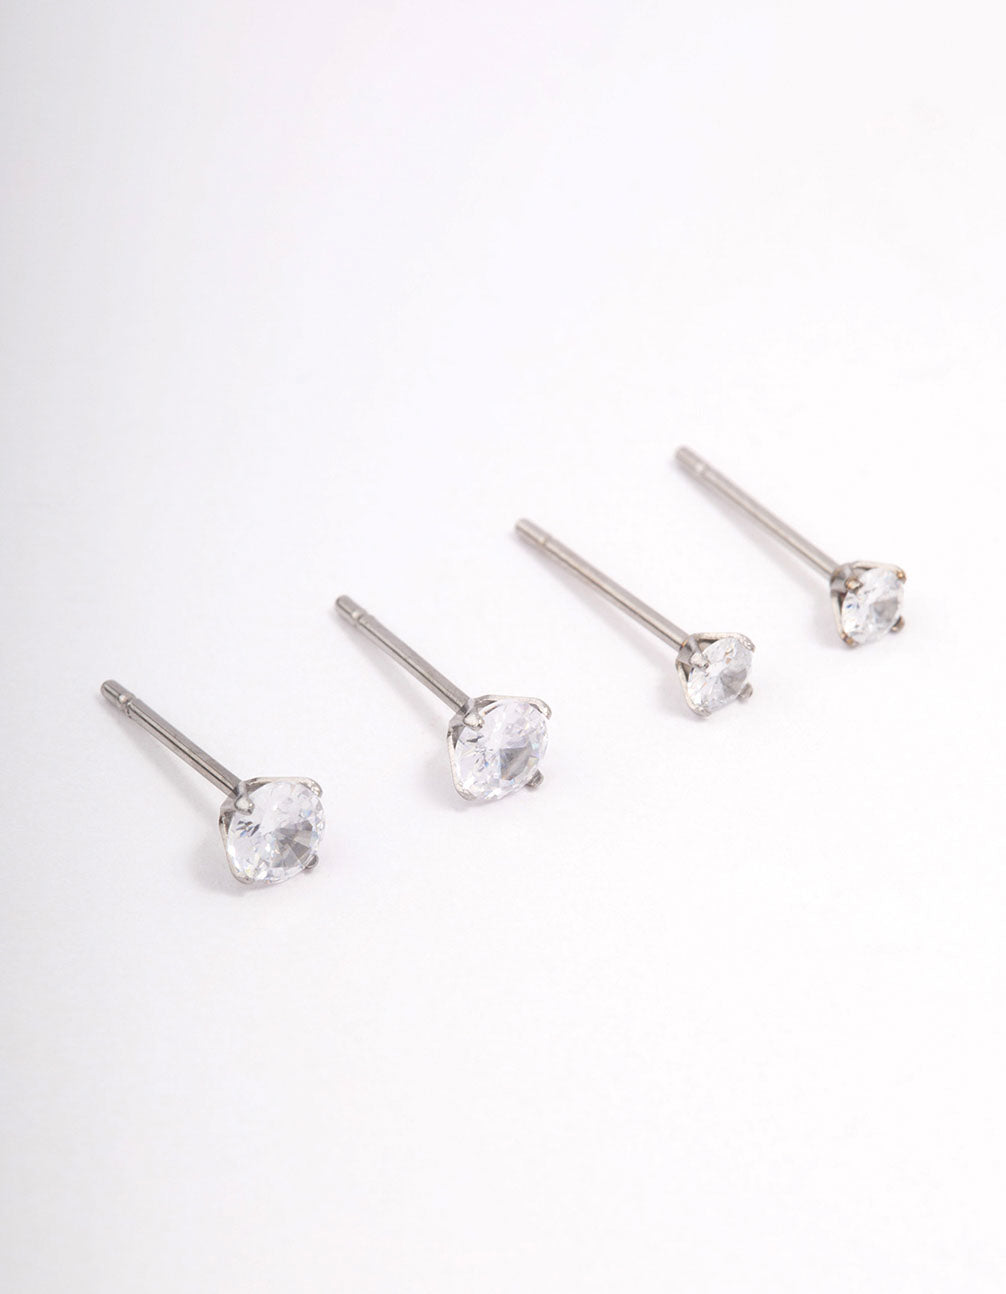 20g CZ square stud screw back earrings Sterling silver, 4mm square Sterling  Silver piercing, tiny square twist back stud earrings silver